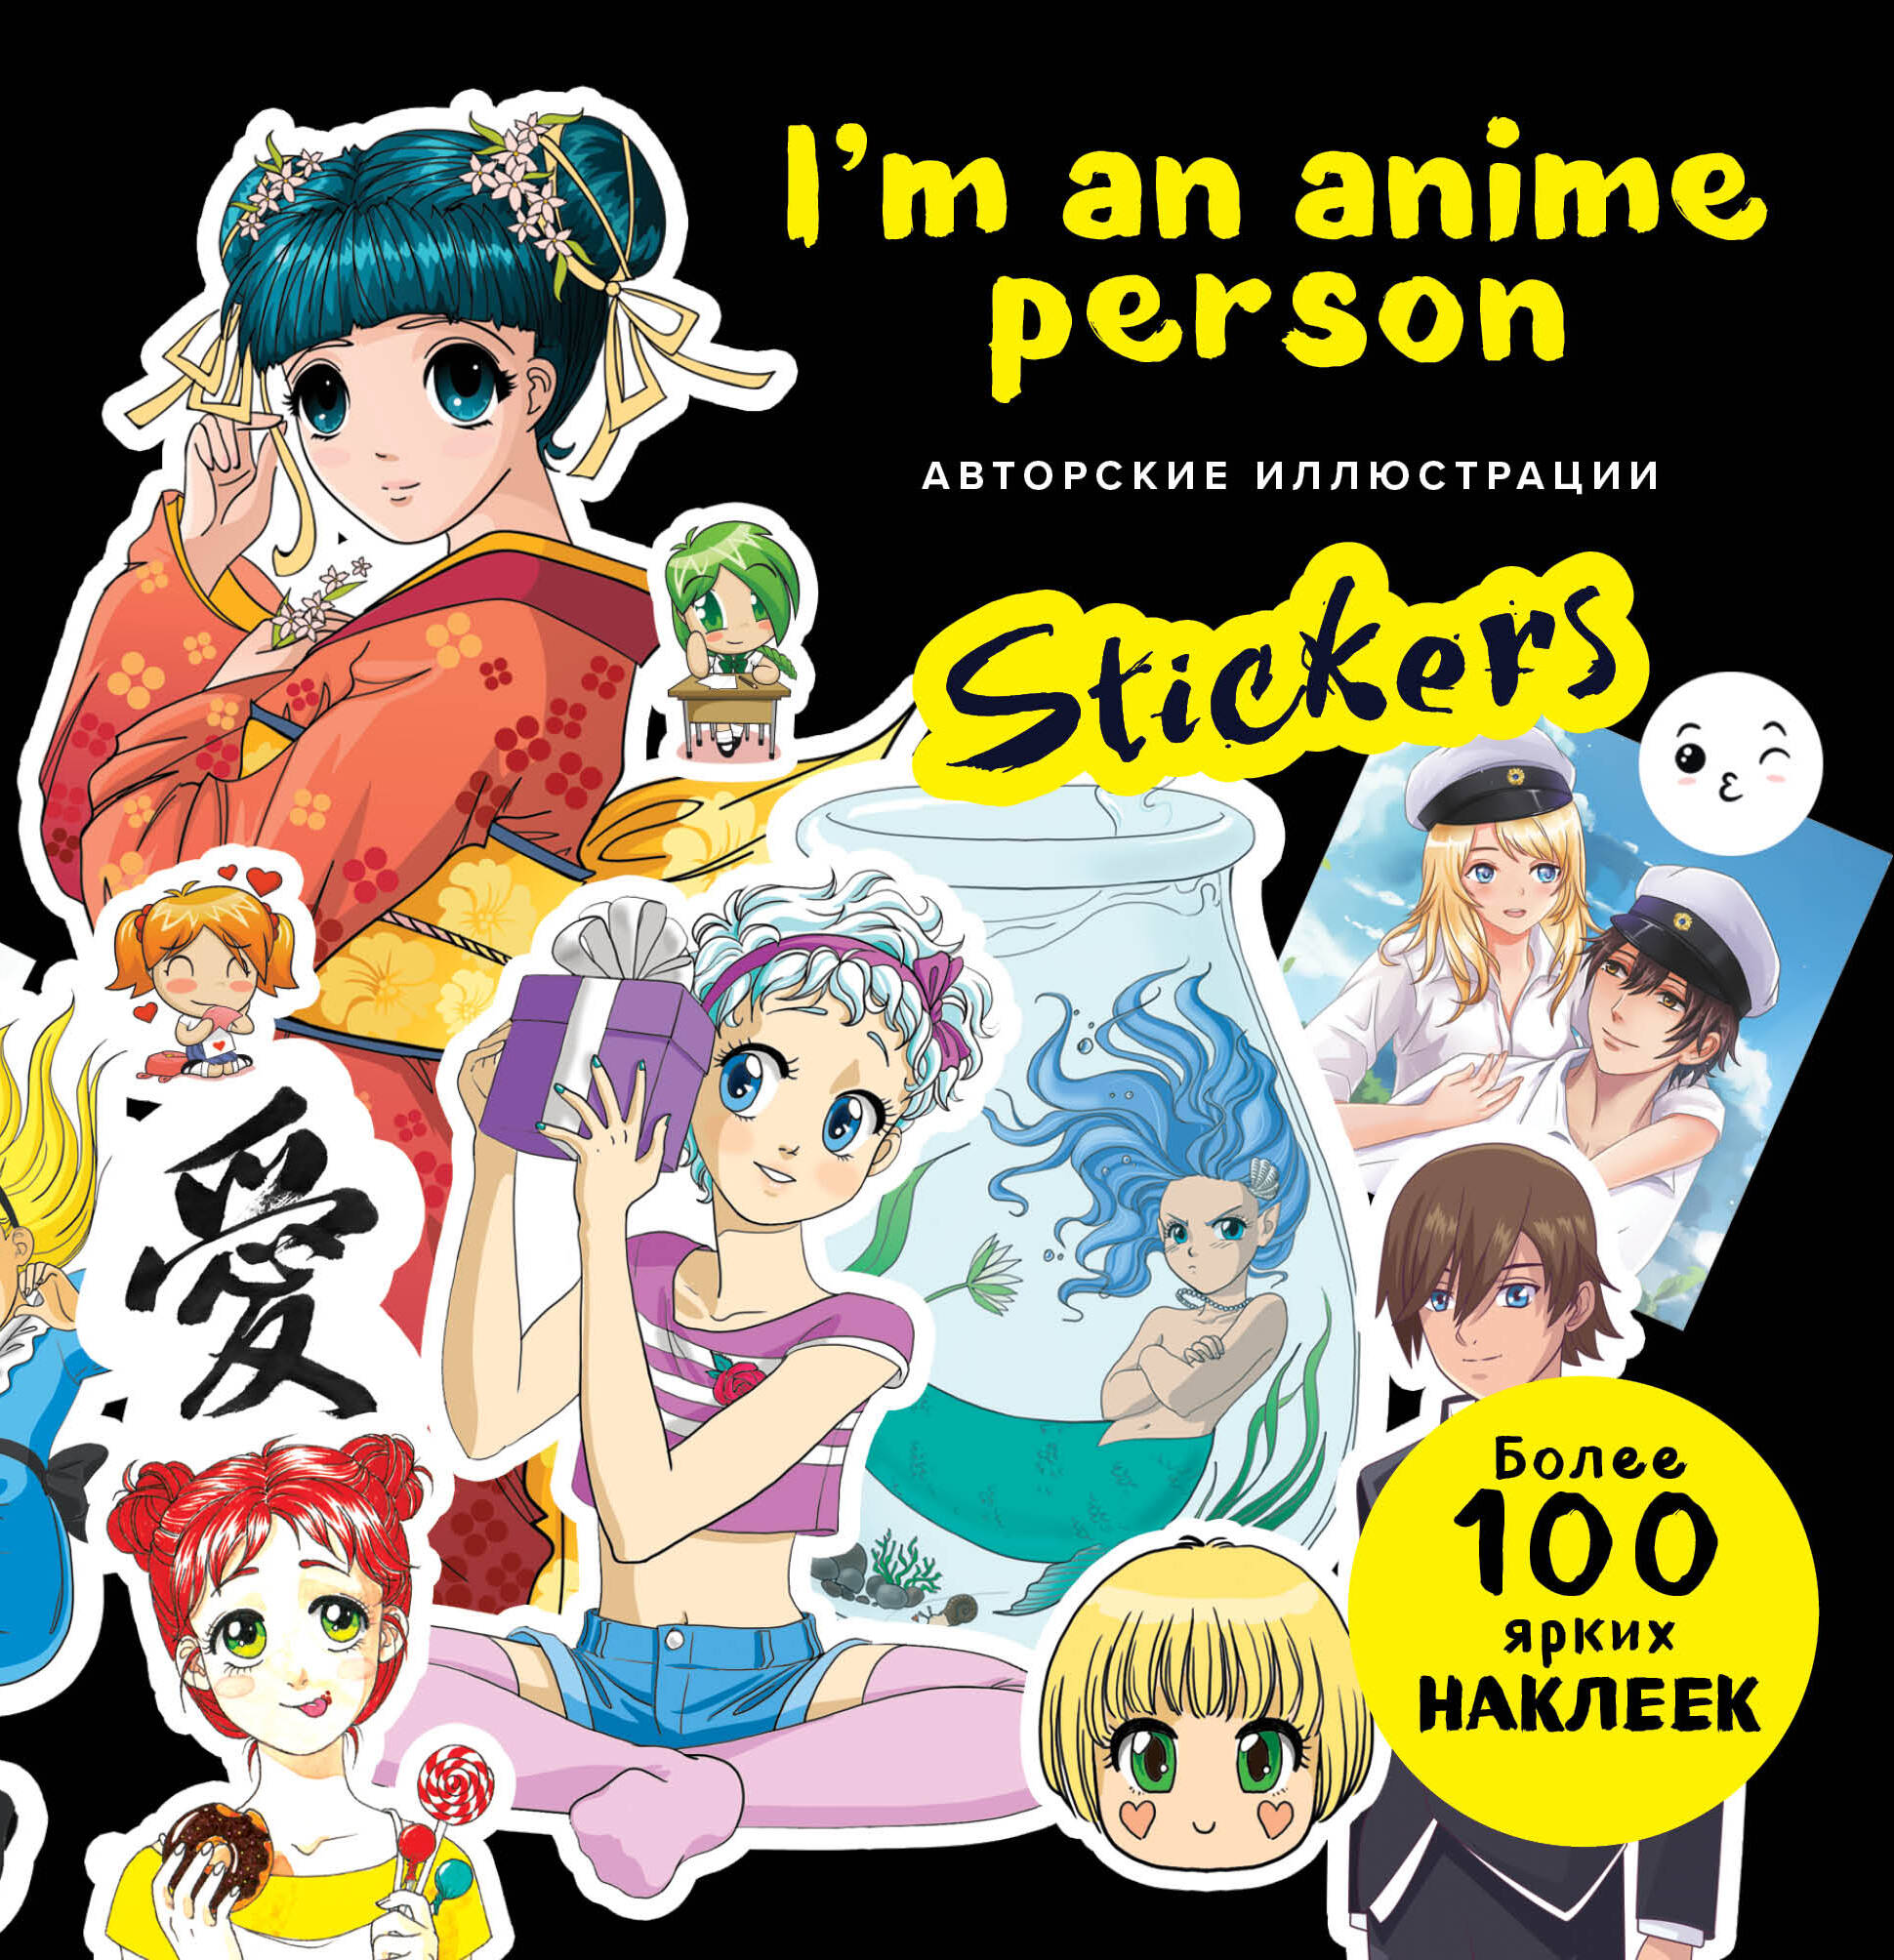 Im an anime person. Stickers. Более 100 ярких наклеек! блокнот для истинных анимешников im an anime person